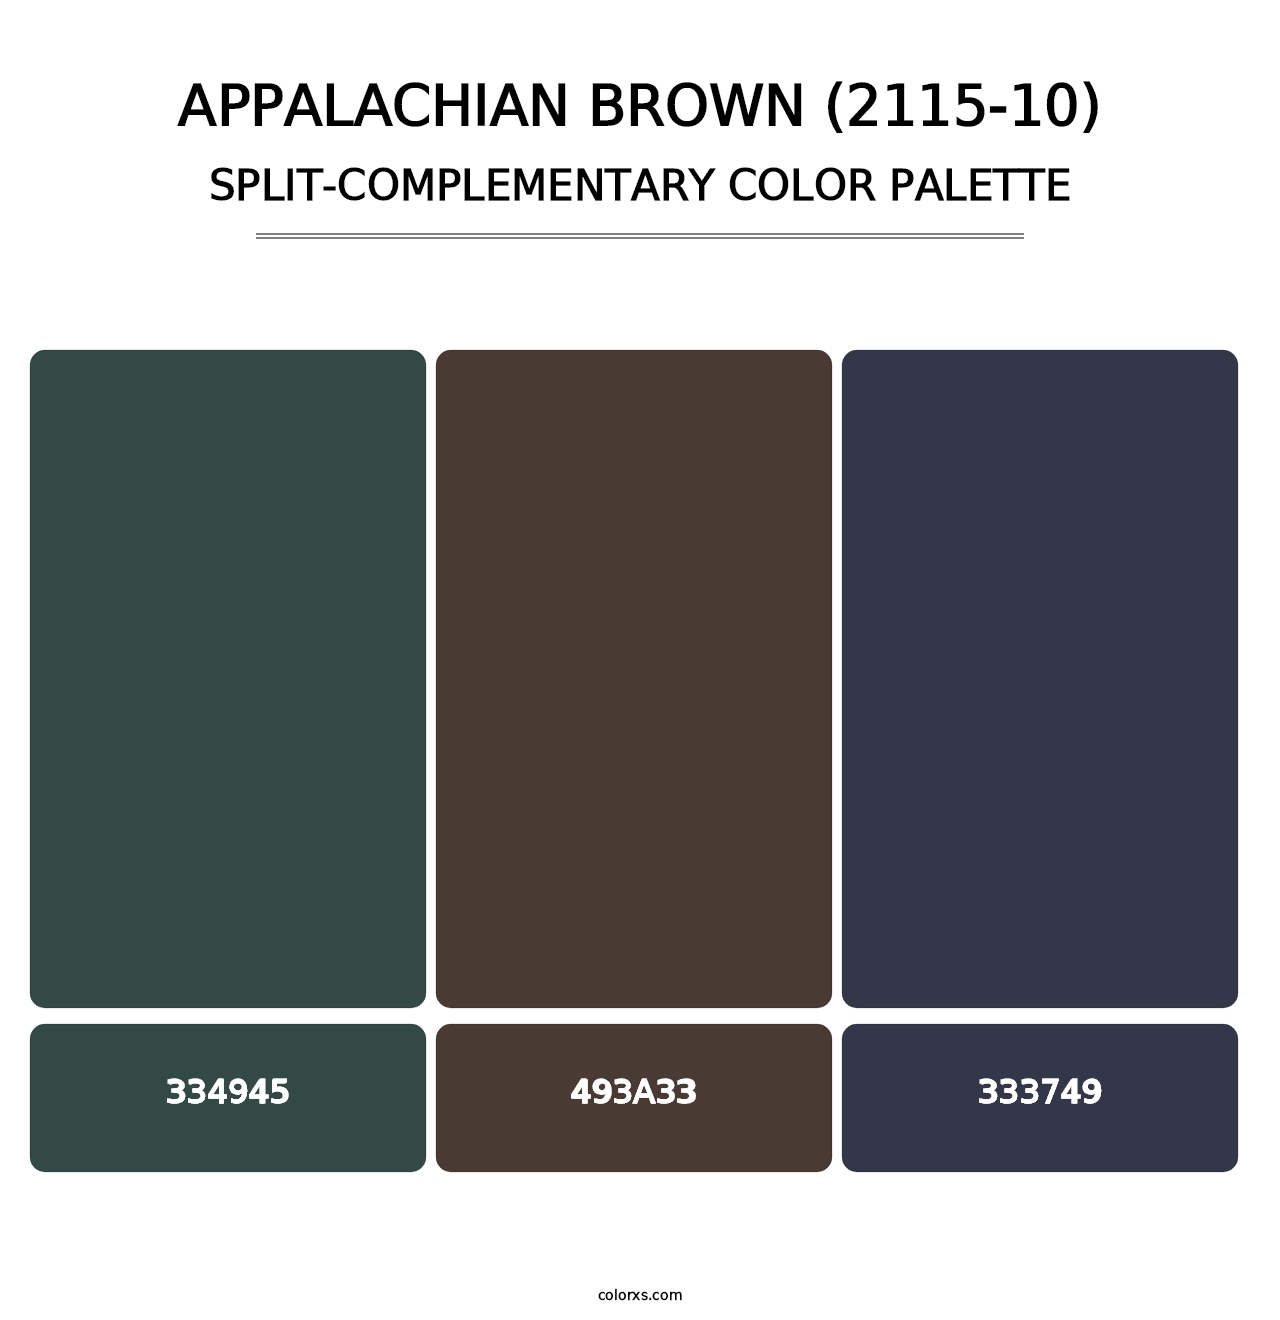 Appalachian Brown (2115-10) - Split-Complementary Color Palette